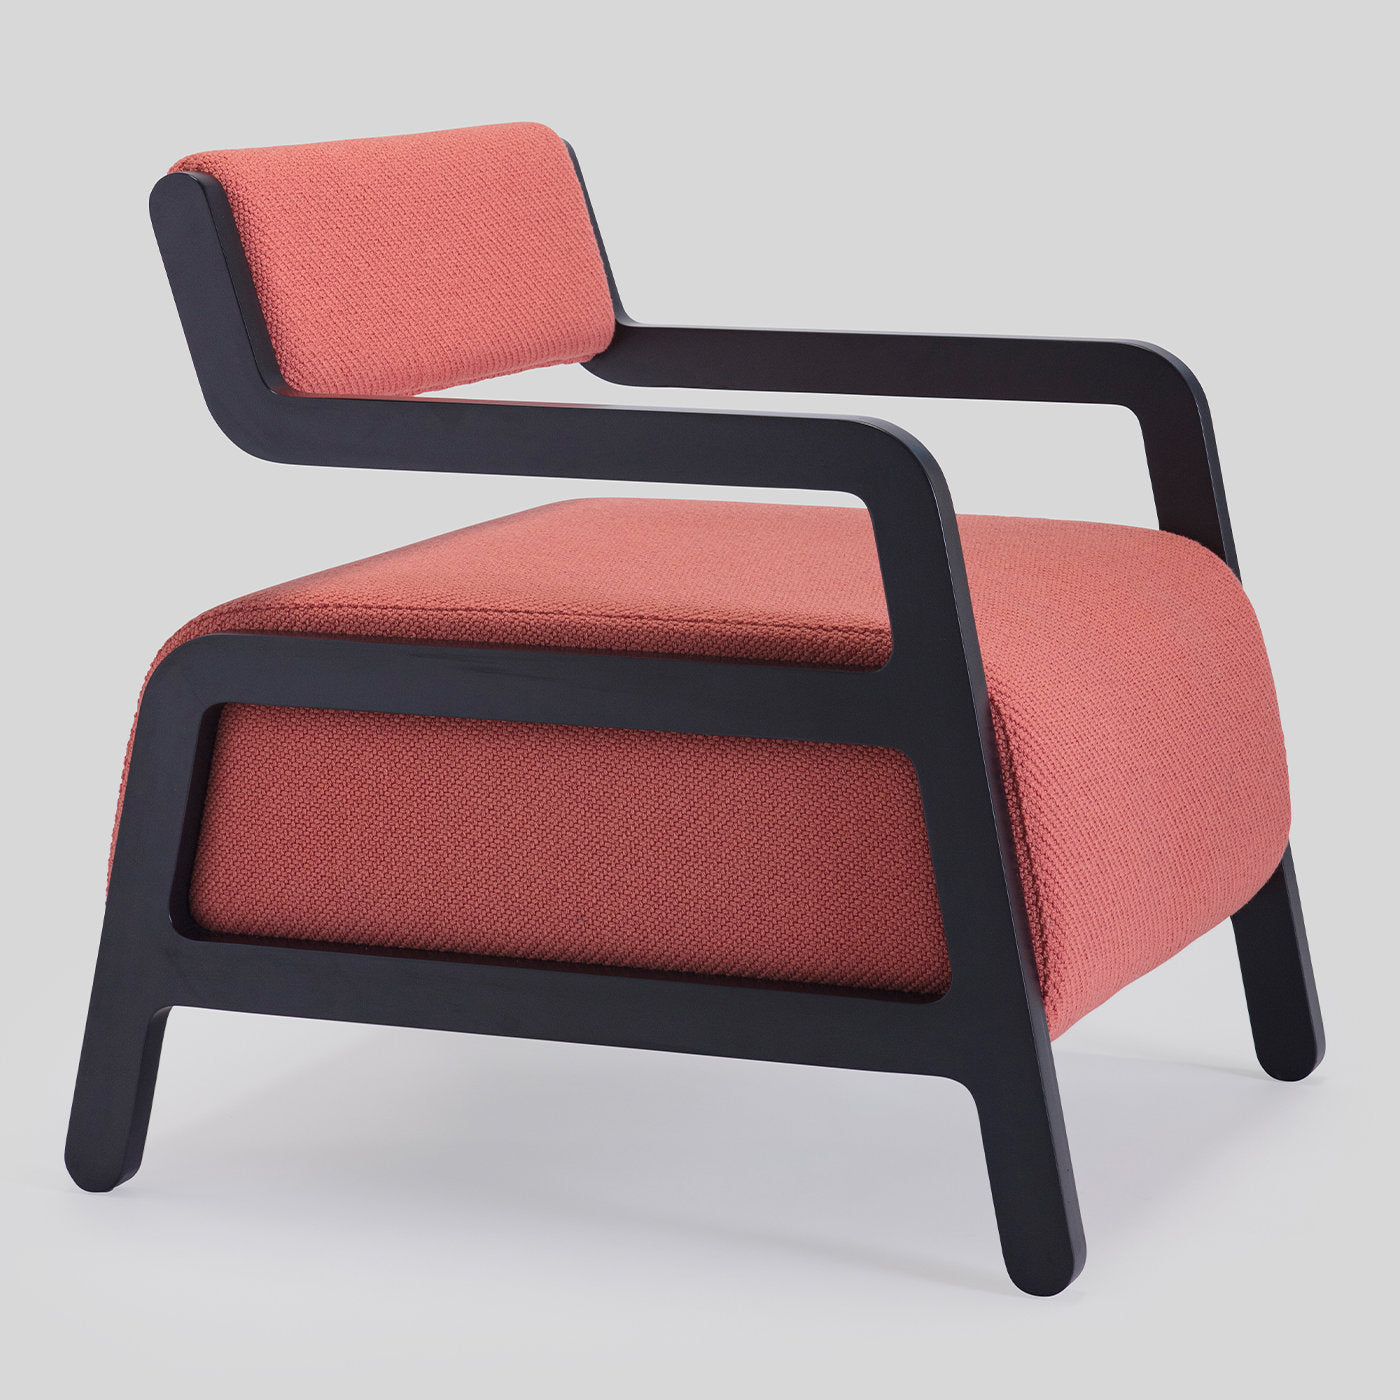 Moki Red Lounge Chair - Alternative view 2